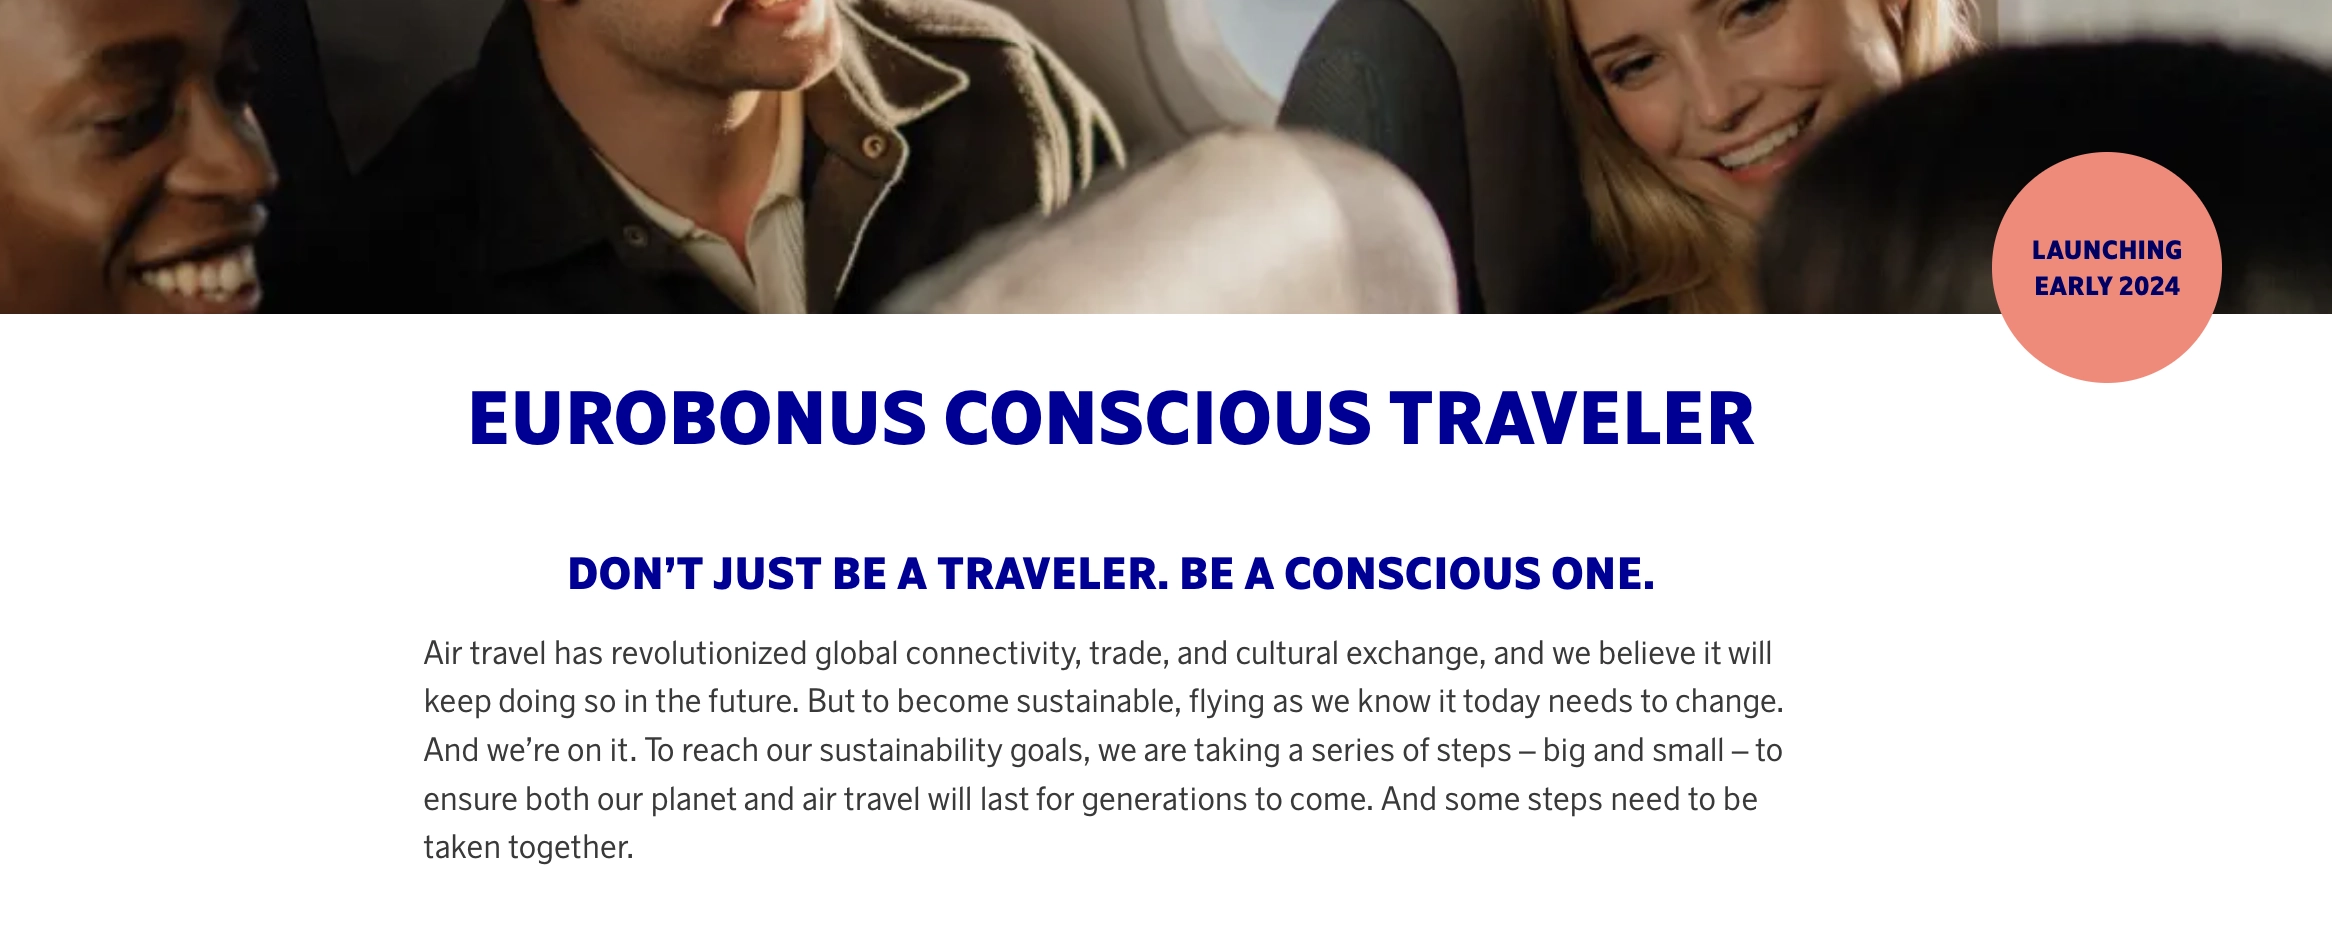 SAS EuroBonus Conscious Traveler Initiative (Set To Launch in Early 2024).